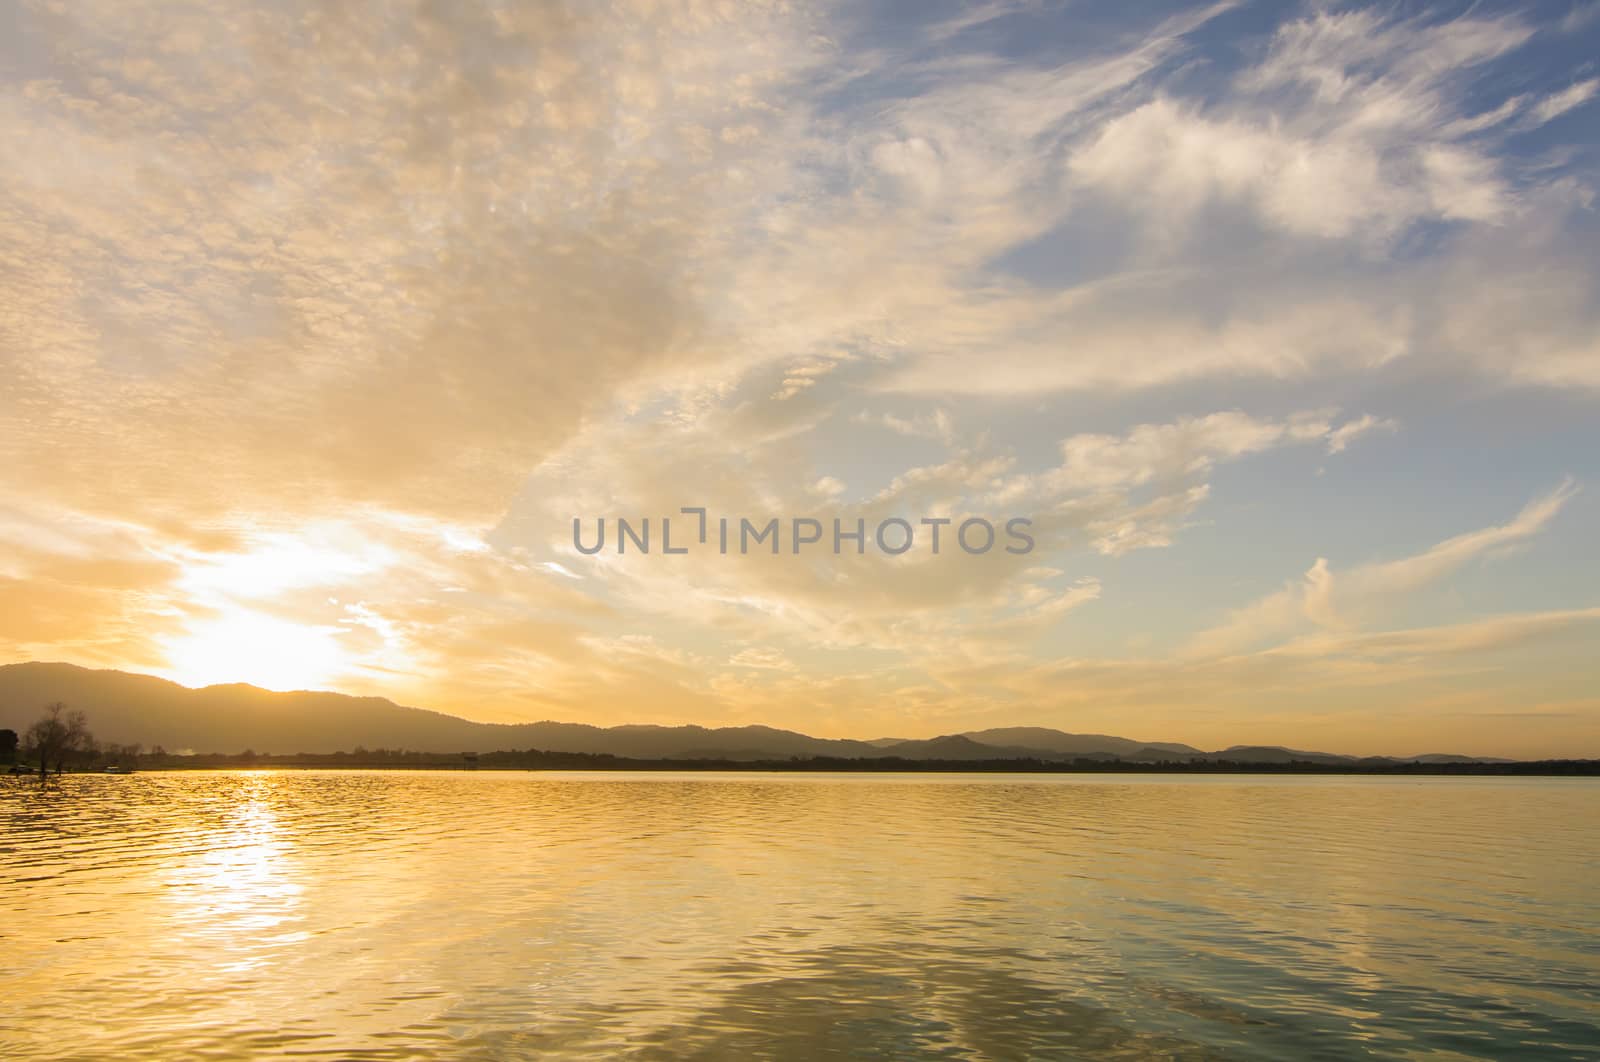 Sunrise on a lake  by Sorapop